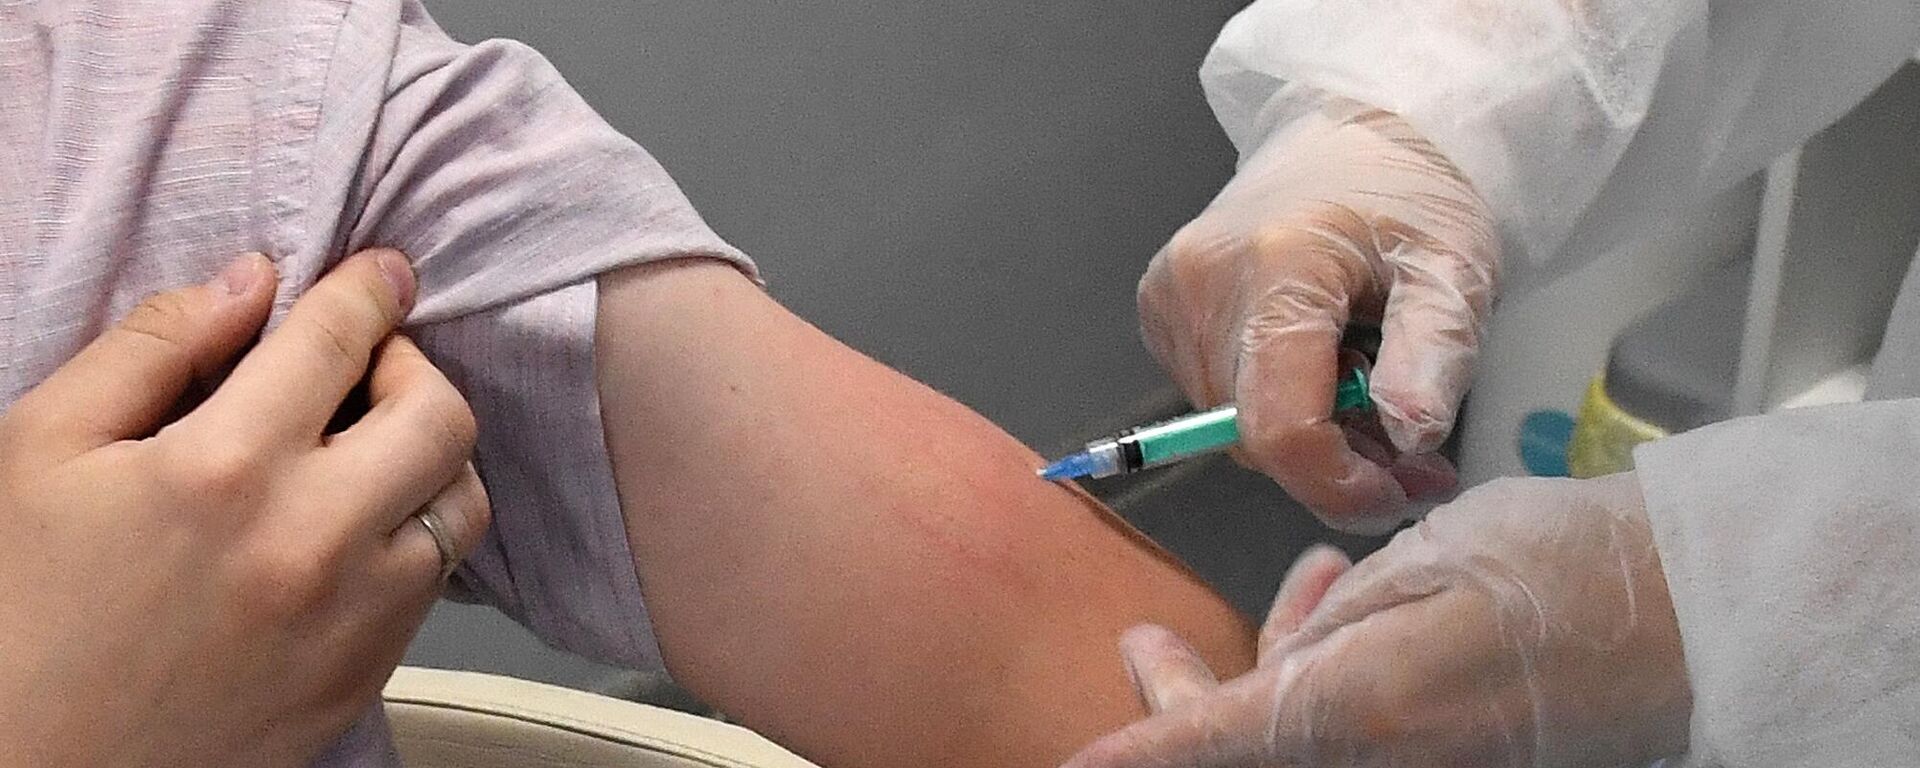 Медицинская сестра делает прививку от COVID-19 - Sputnik Беларусь, 1920, 27.09.2021